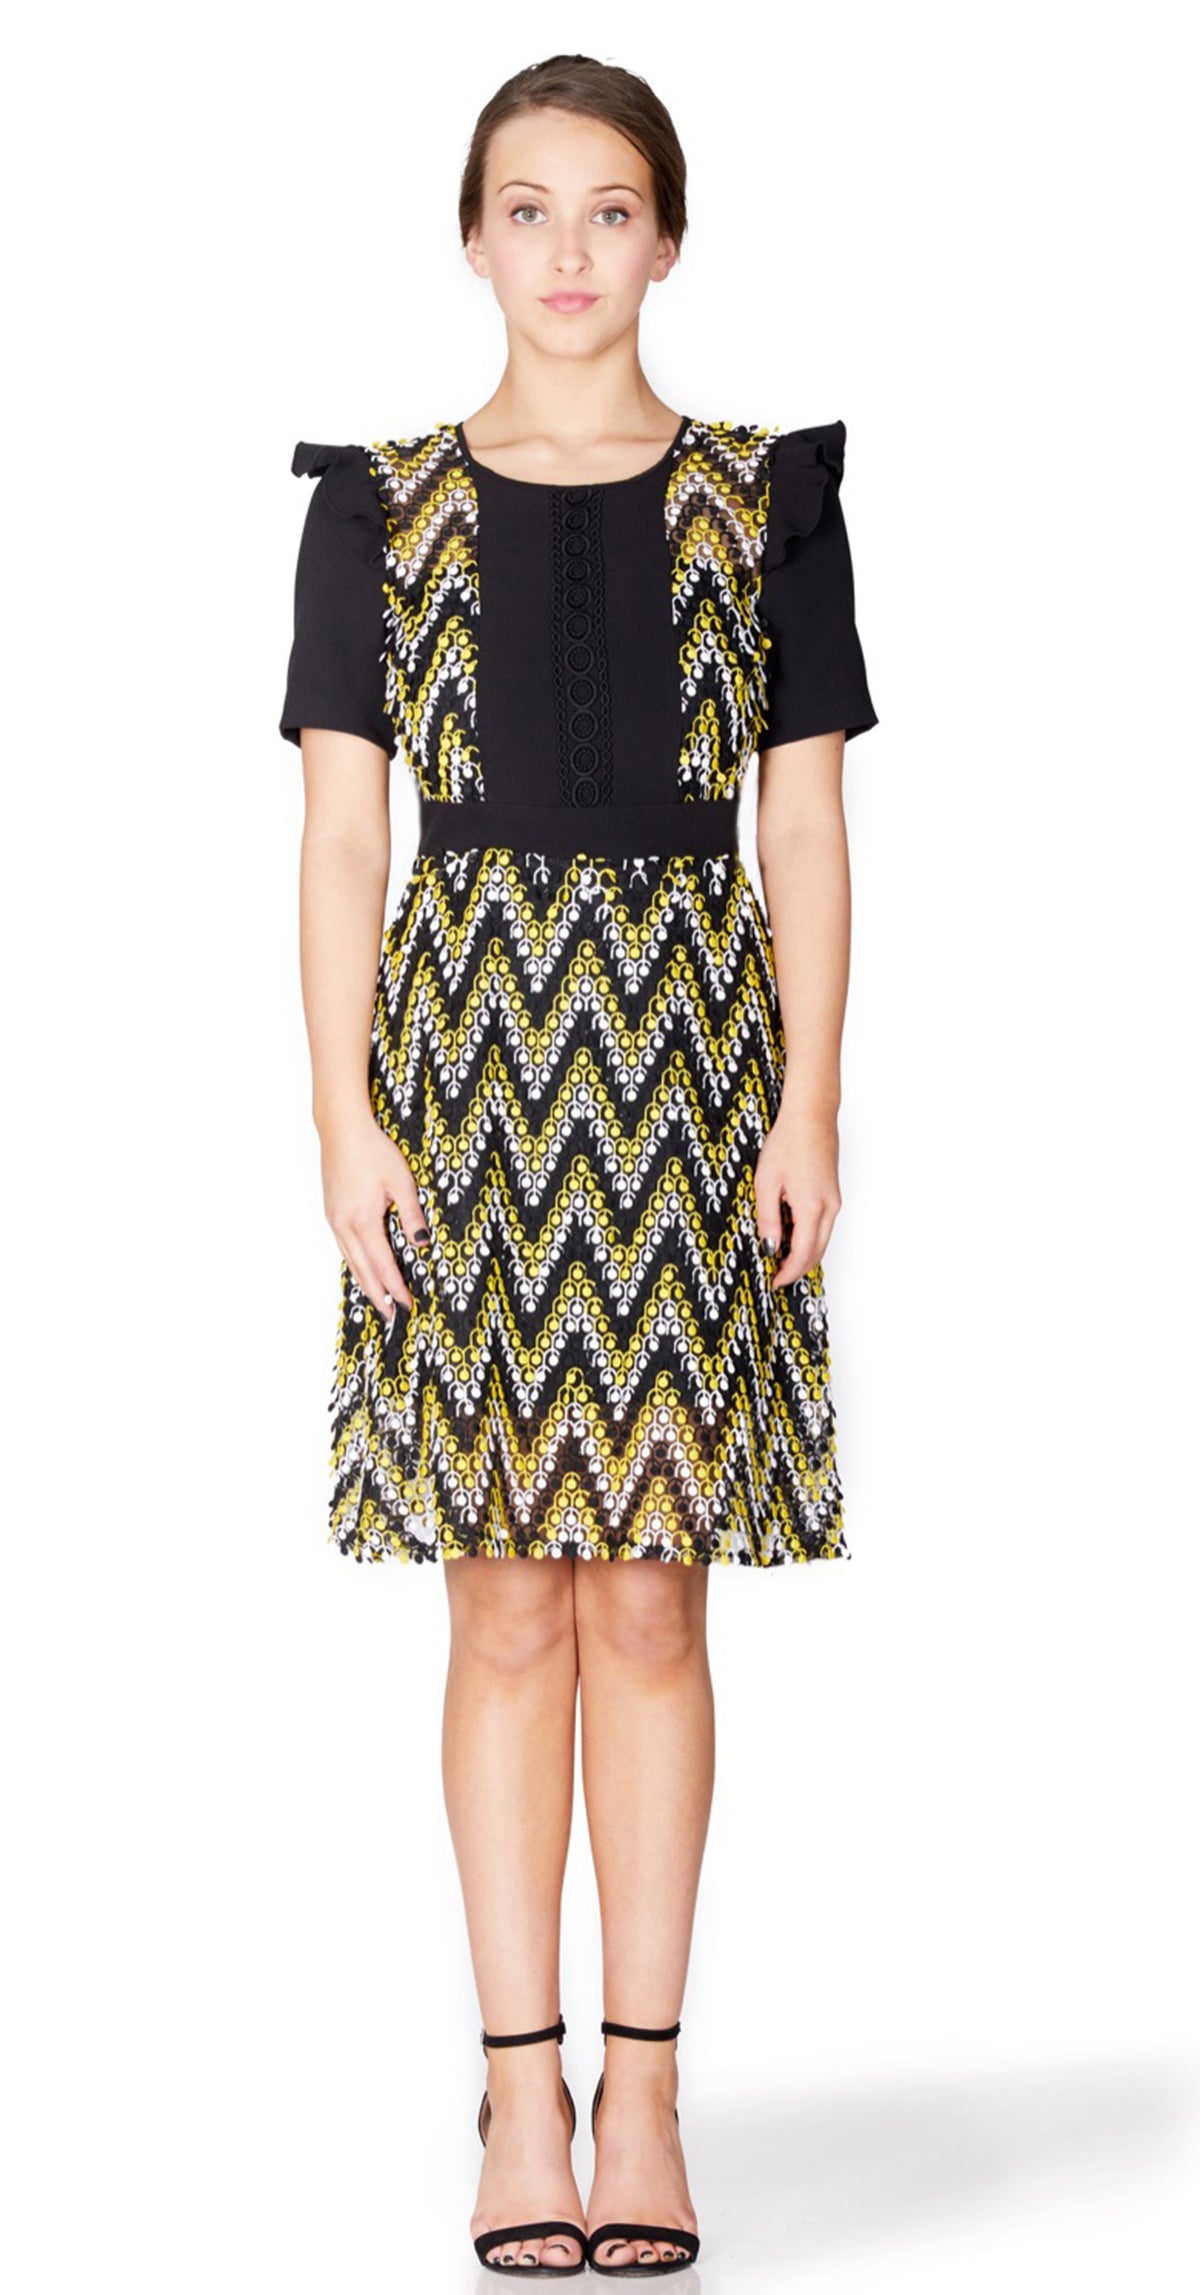 Melissa Dress DRL220 Black/Lace Contrast Sample, Size 8 UK